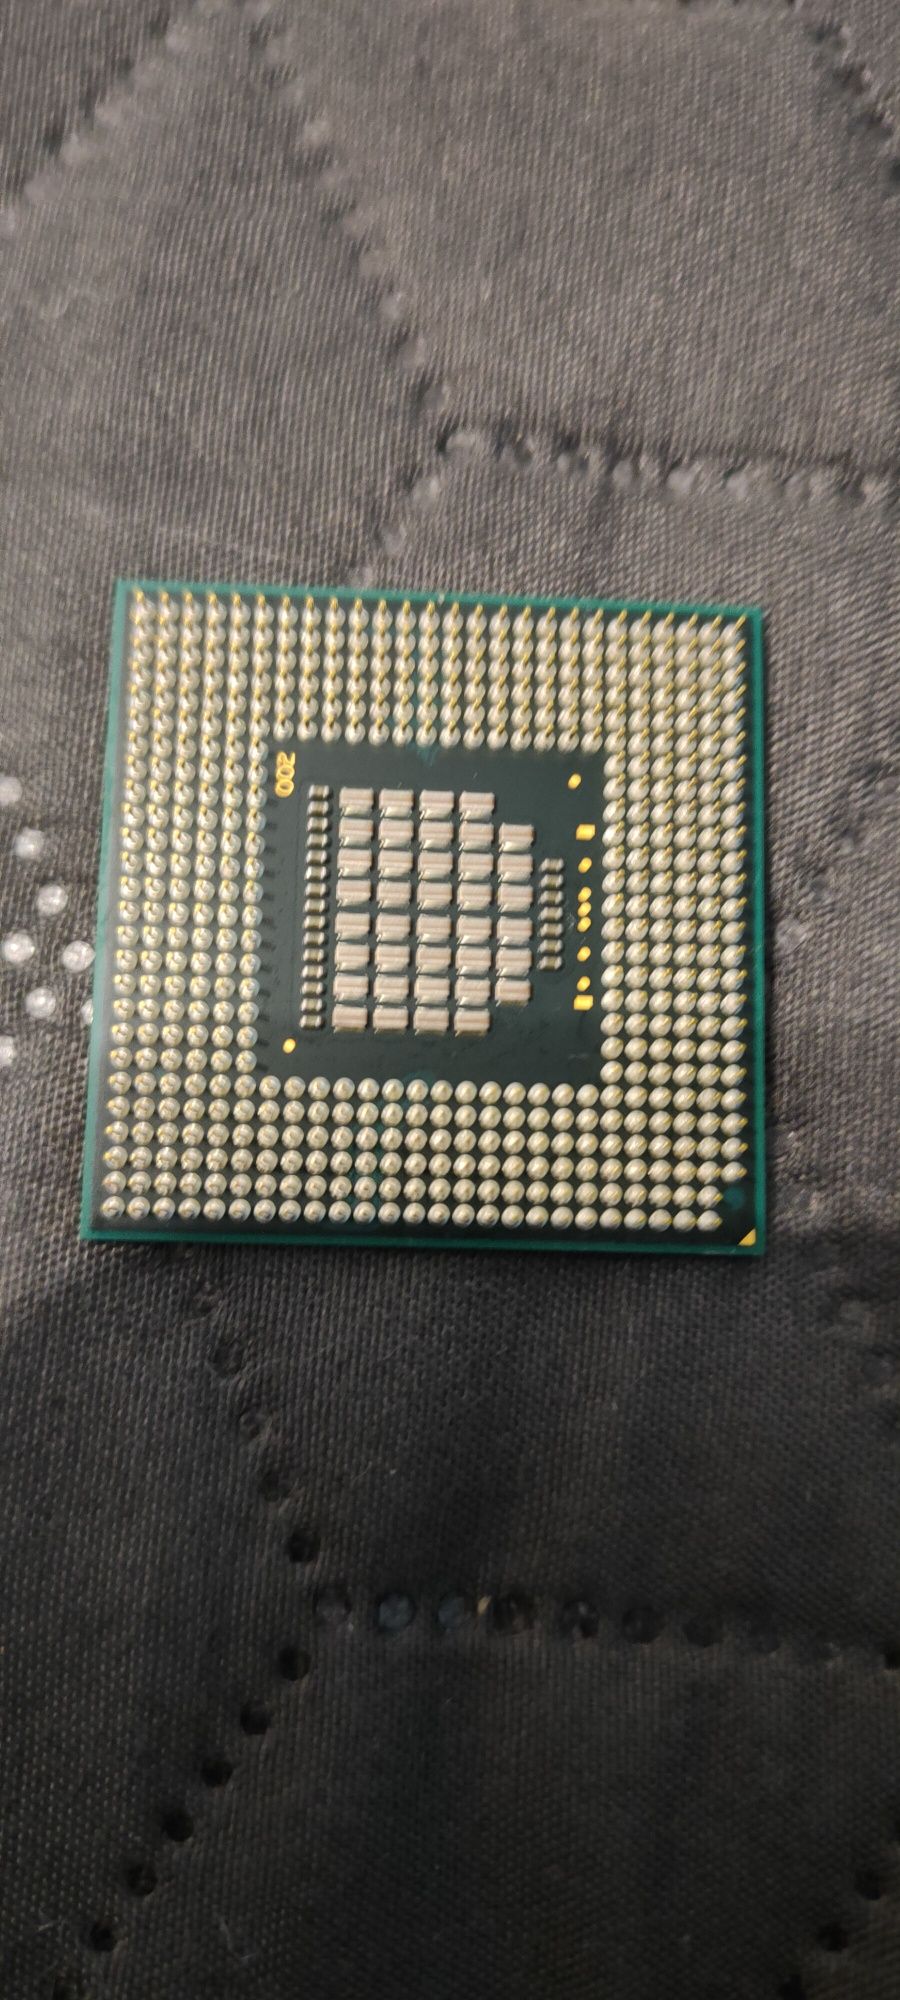 Procesor Intel Core Duo